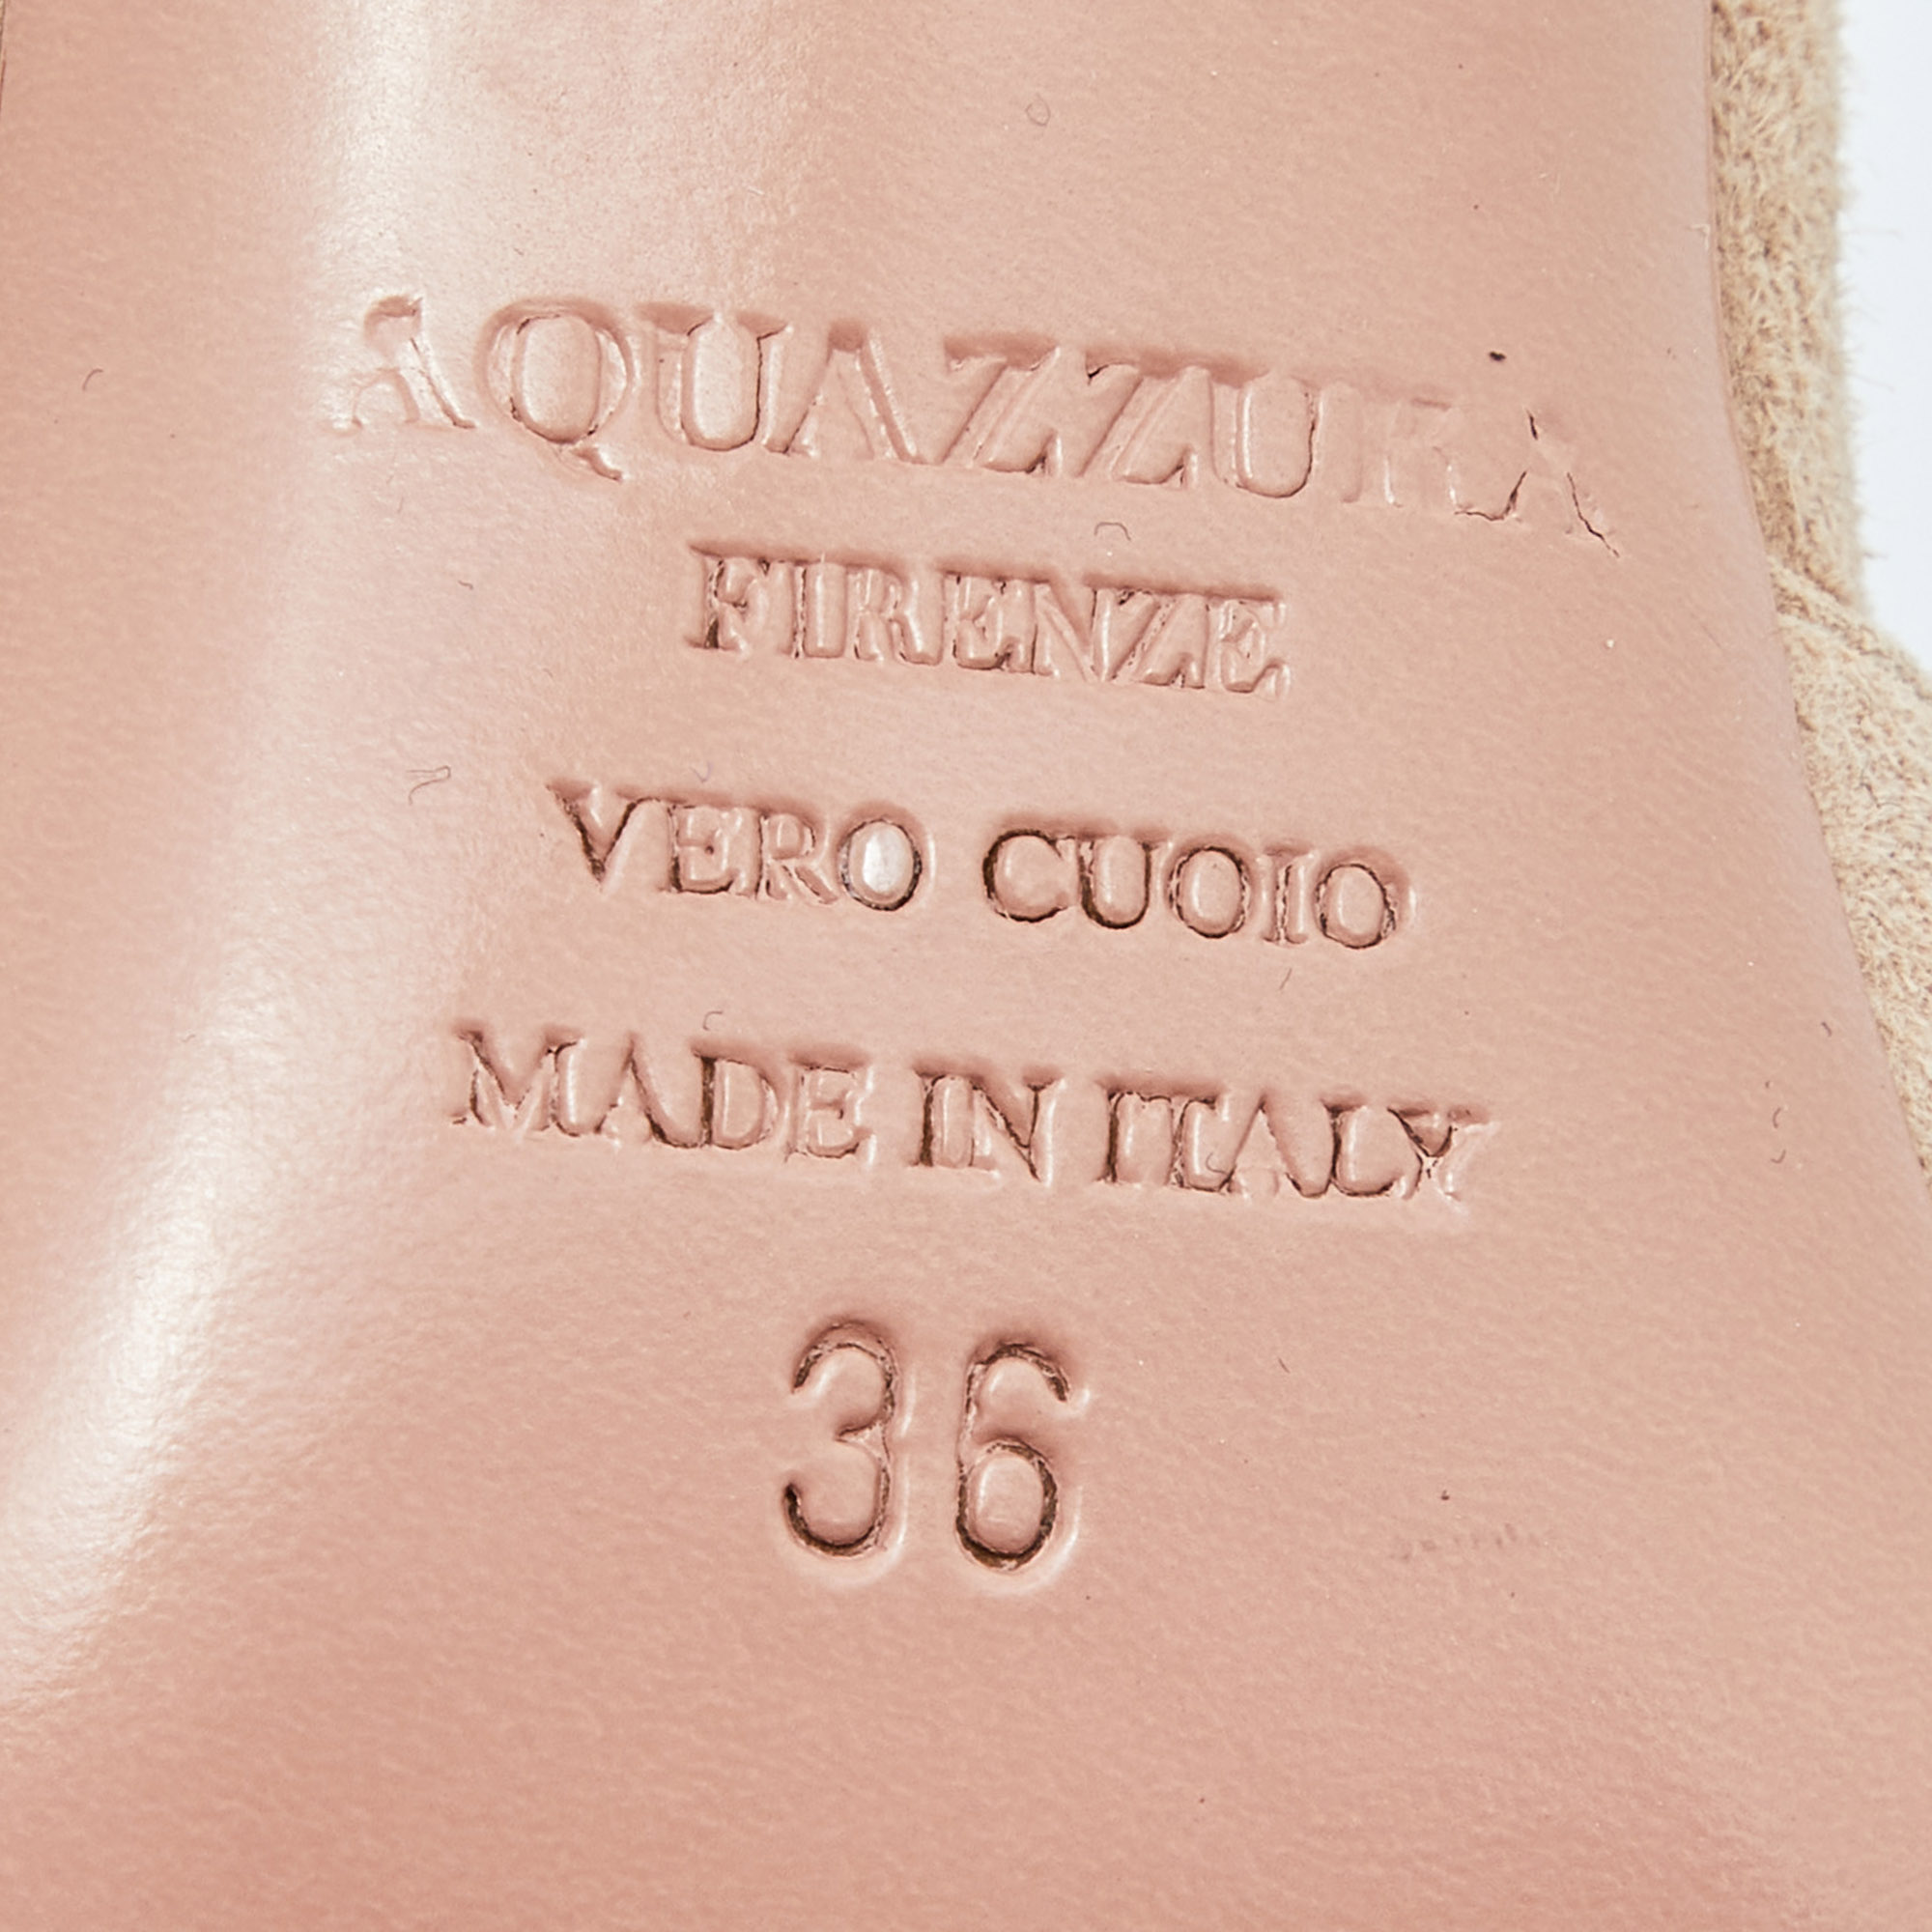 Aquazzura Beige Suede Powder Puff Pointed Toe Slingback Sandals Size 36